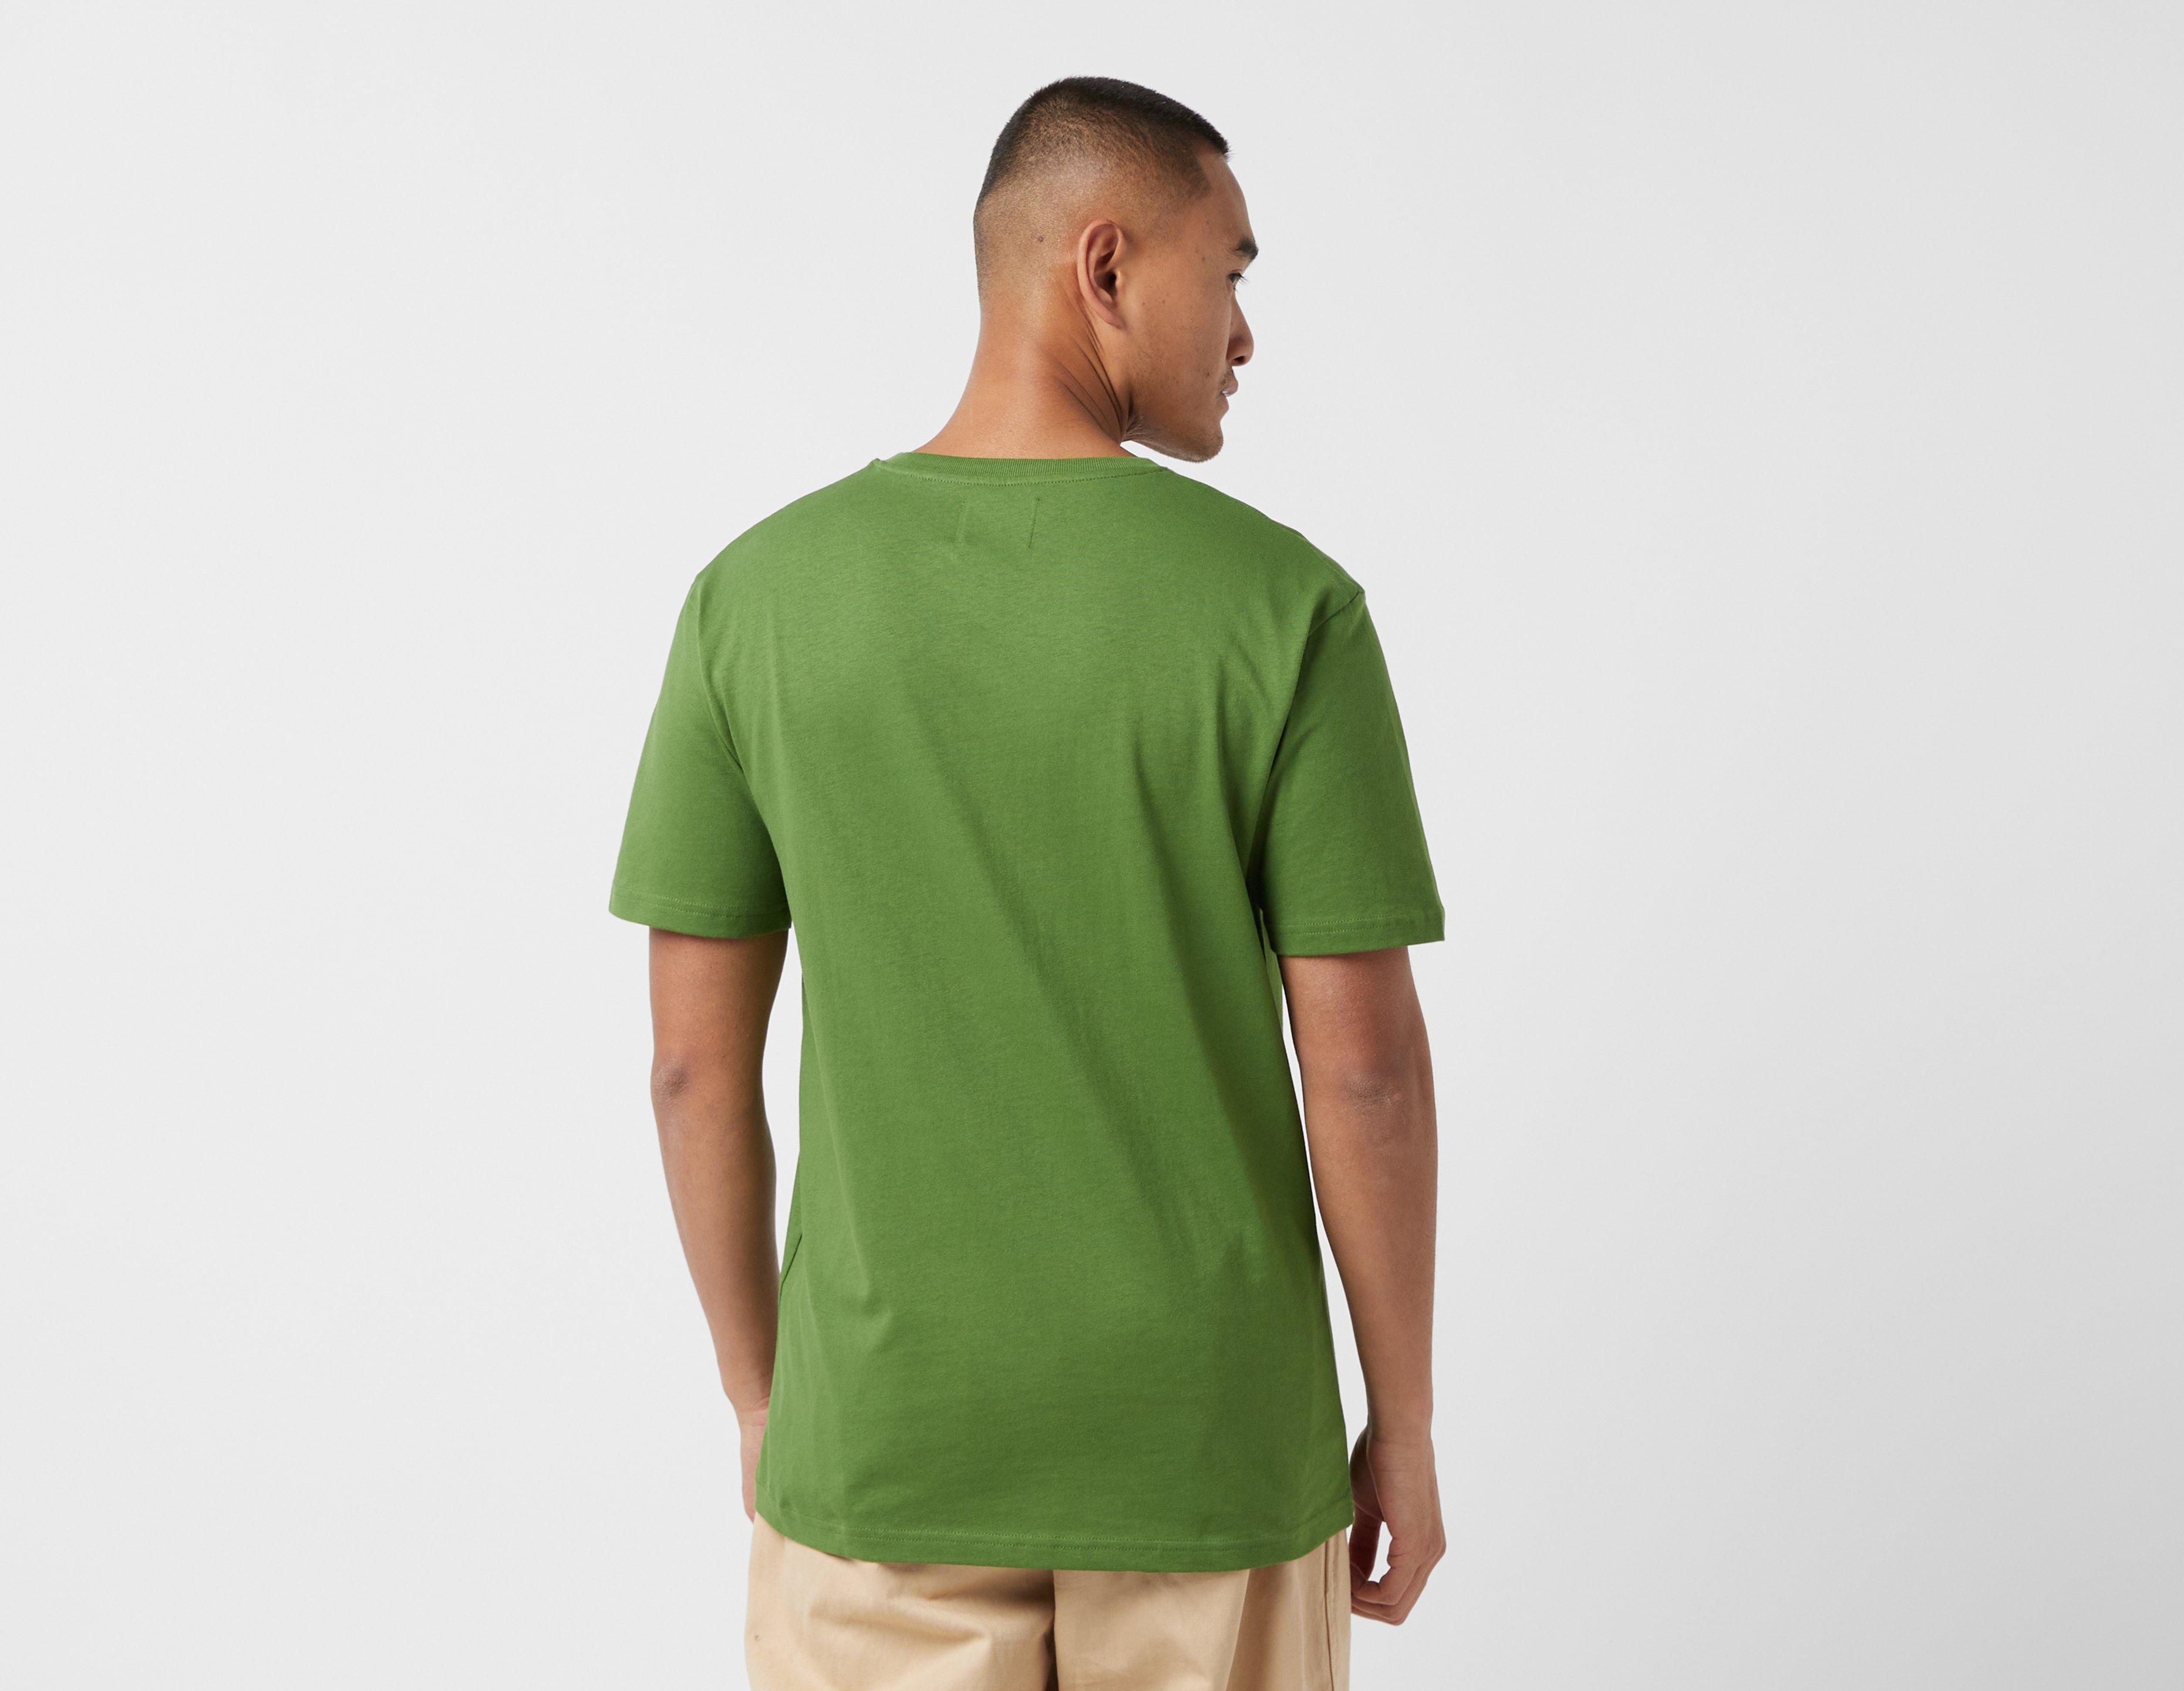 - neutri A | - Ace T Wood Healthdesign? Green Shirt Klassic Double Toni sweatshirt Trey Script cotton Wood by